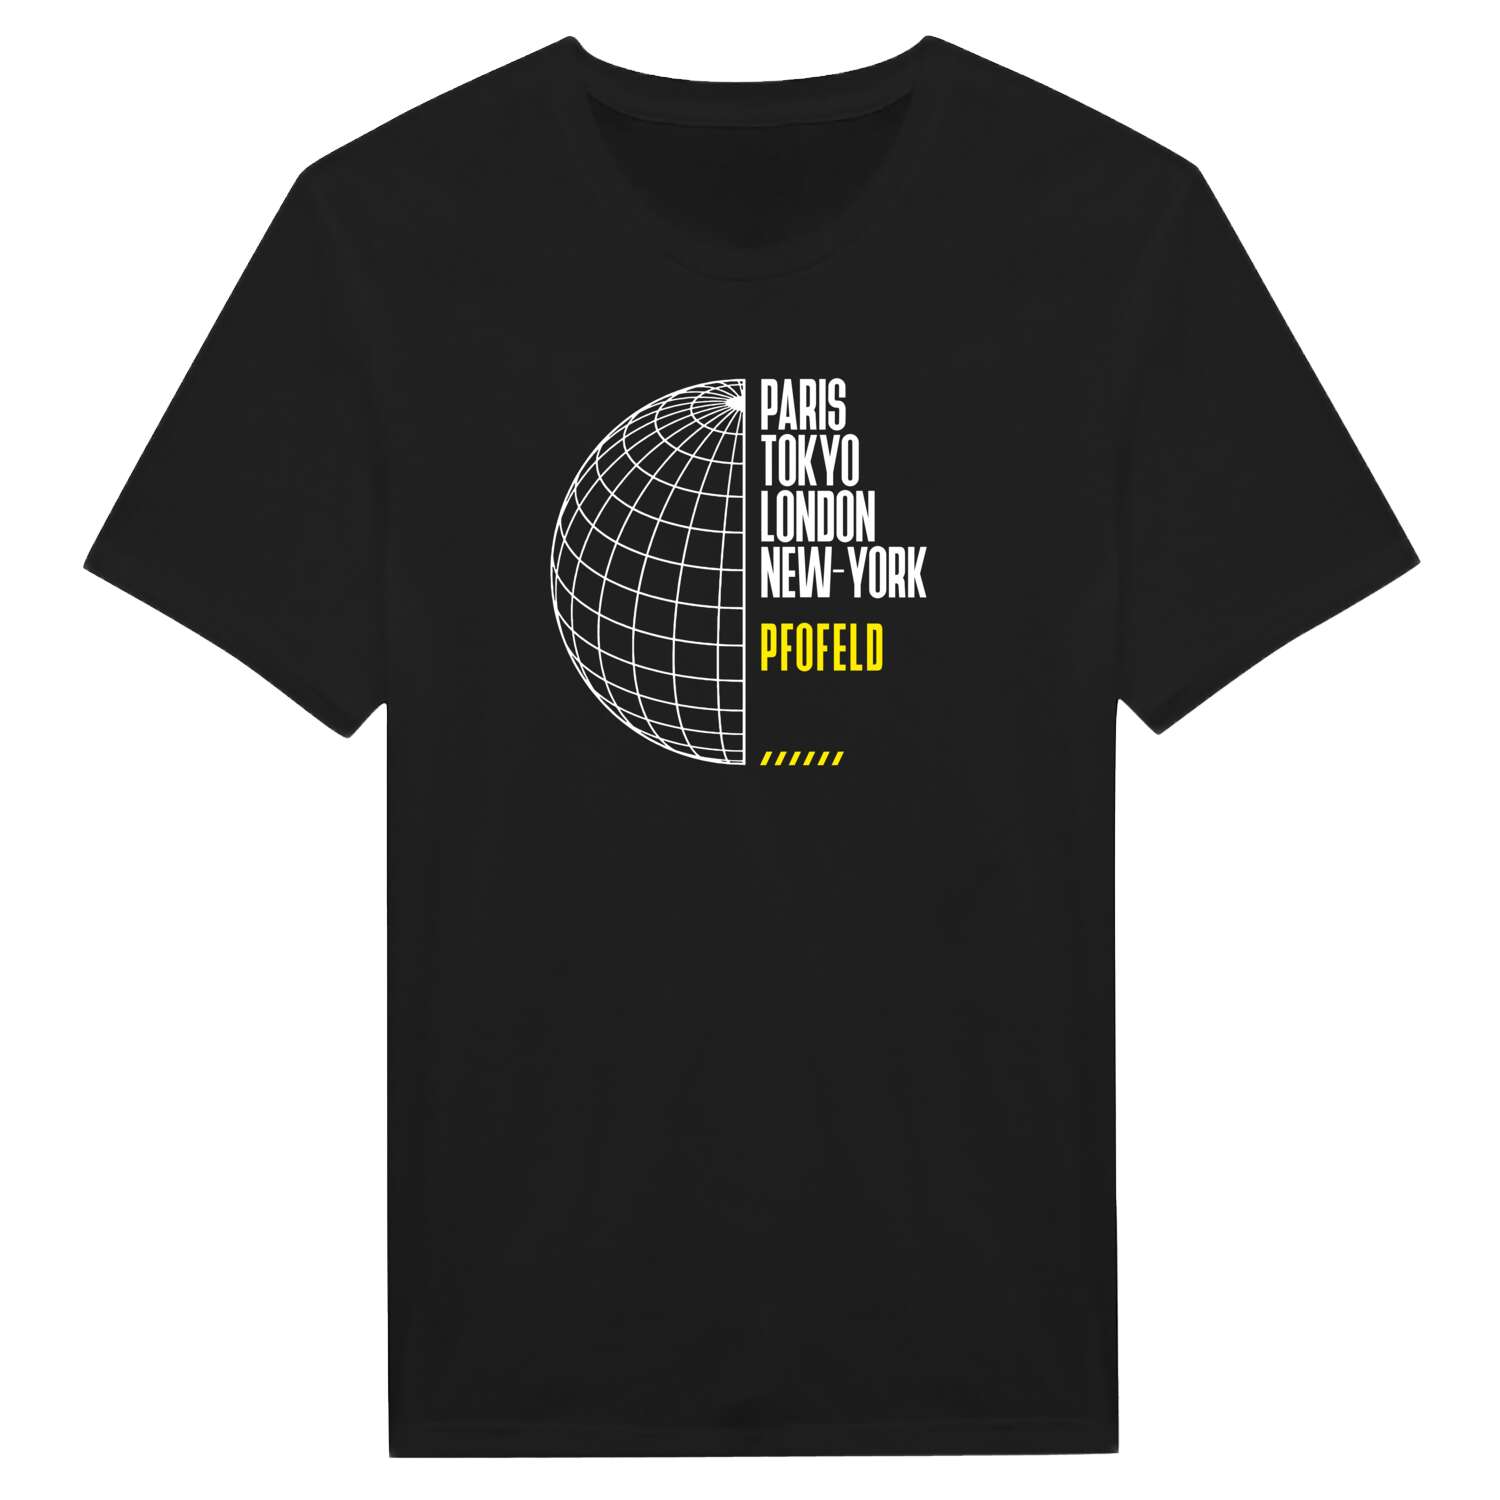 Pfofeld T-Shirt »Paris Tokyo London«